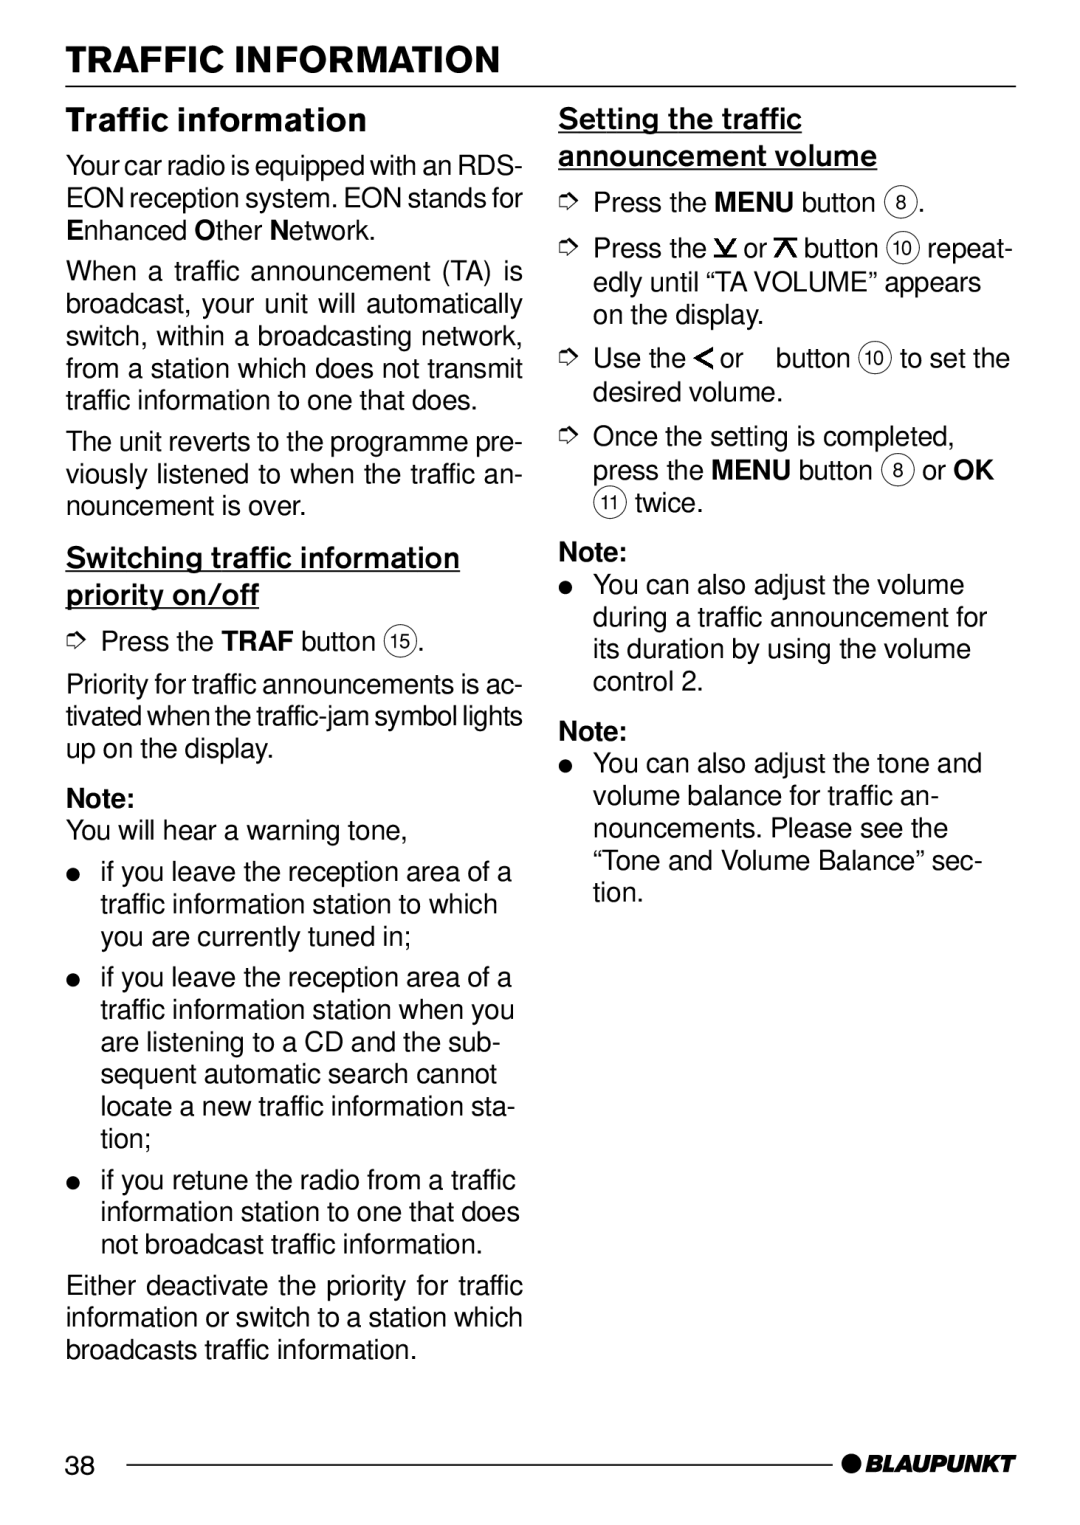 Blaupunkt C52, DJ52 Traffic Information, Traffic information, Switching traffic information priority on/off 